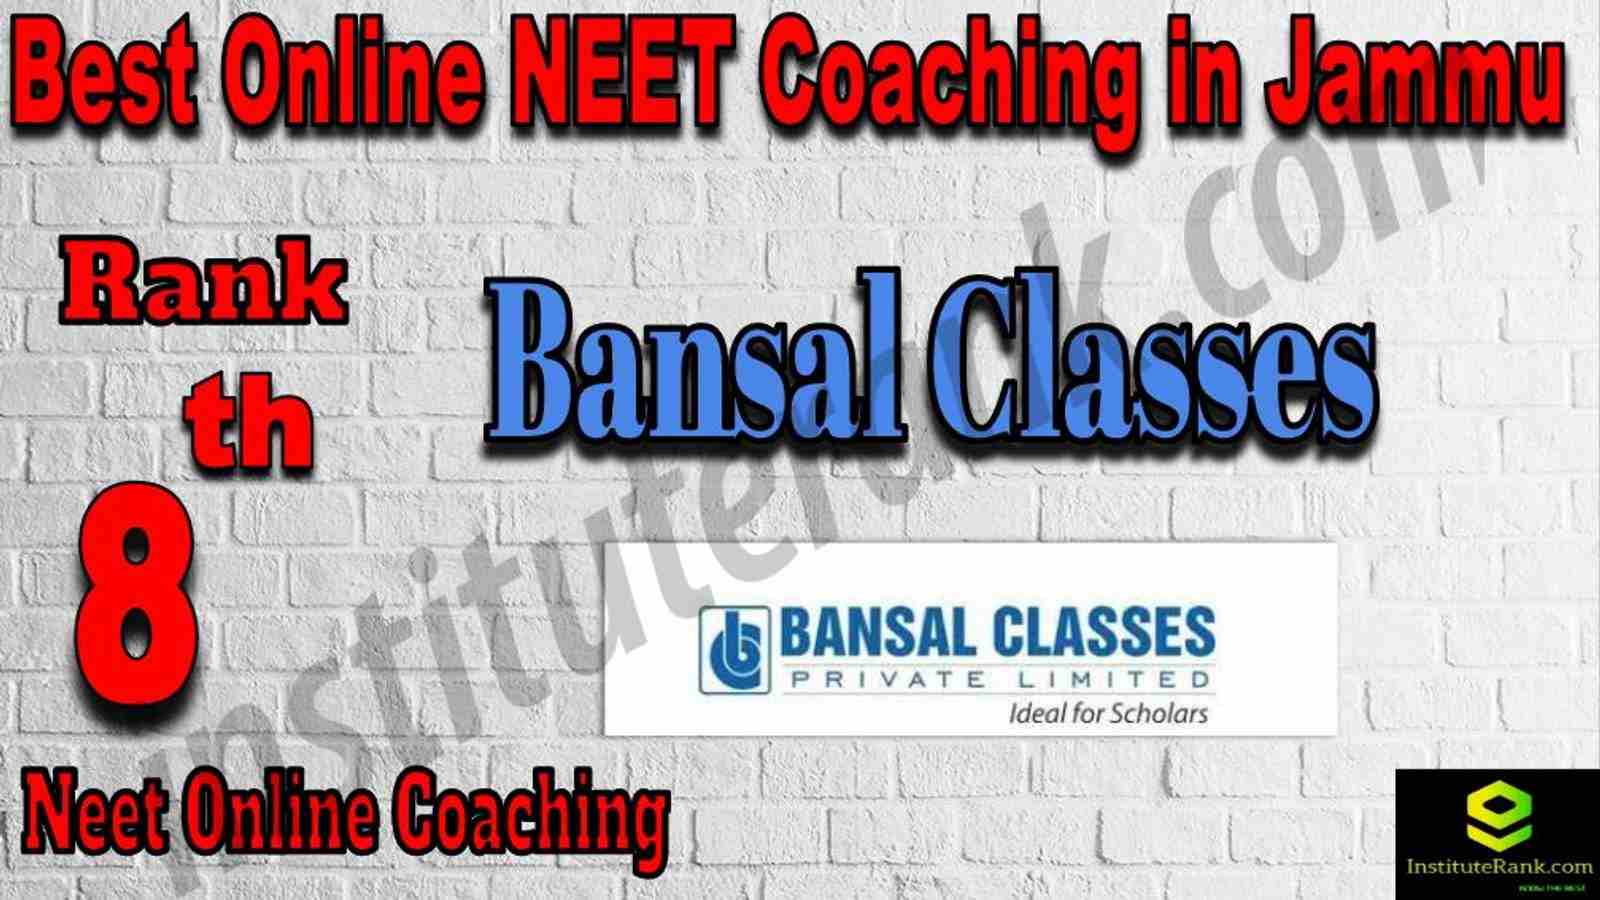 8th Best Online Neet Coaching in Jammu